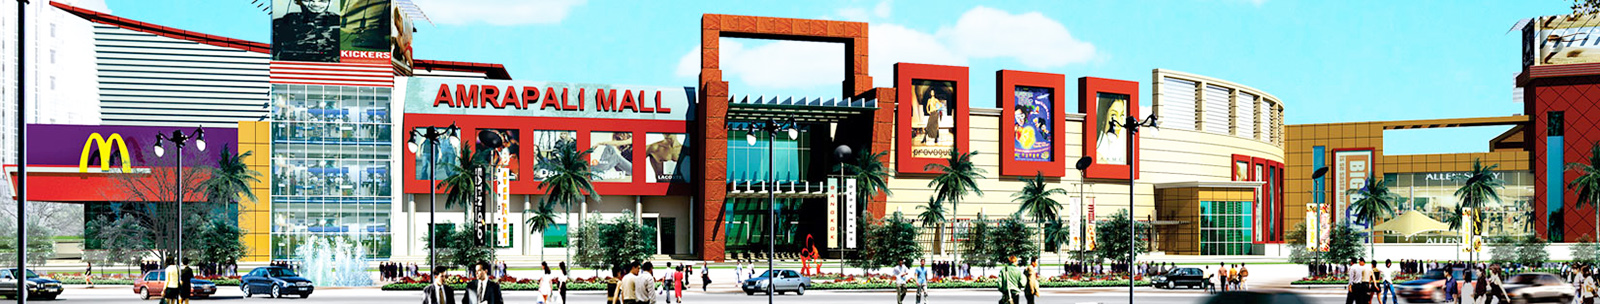 Amrapali West Galleria Mall 